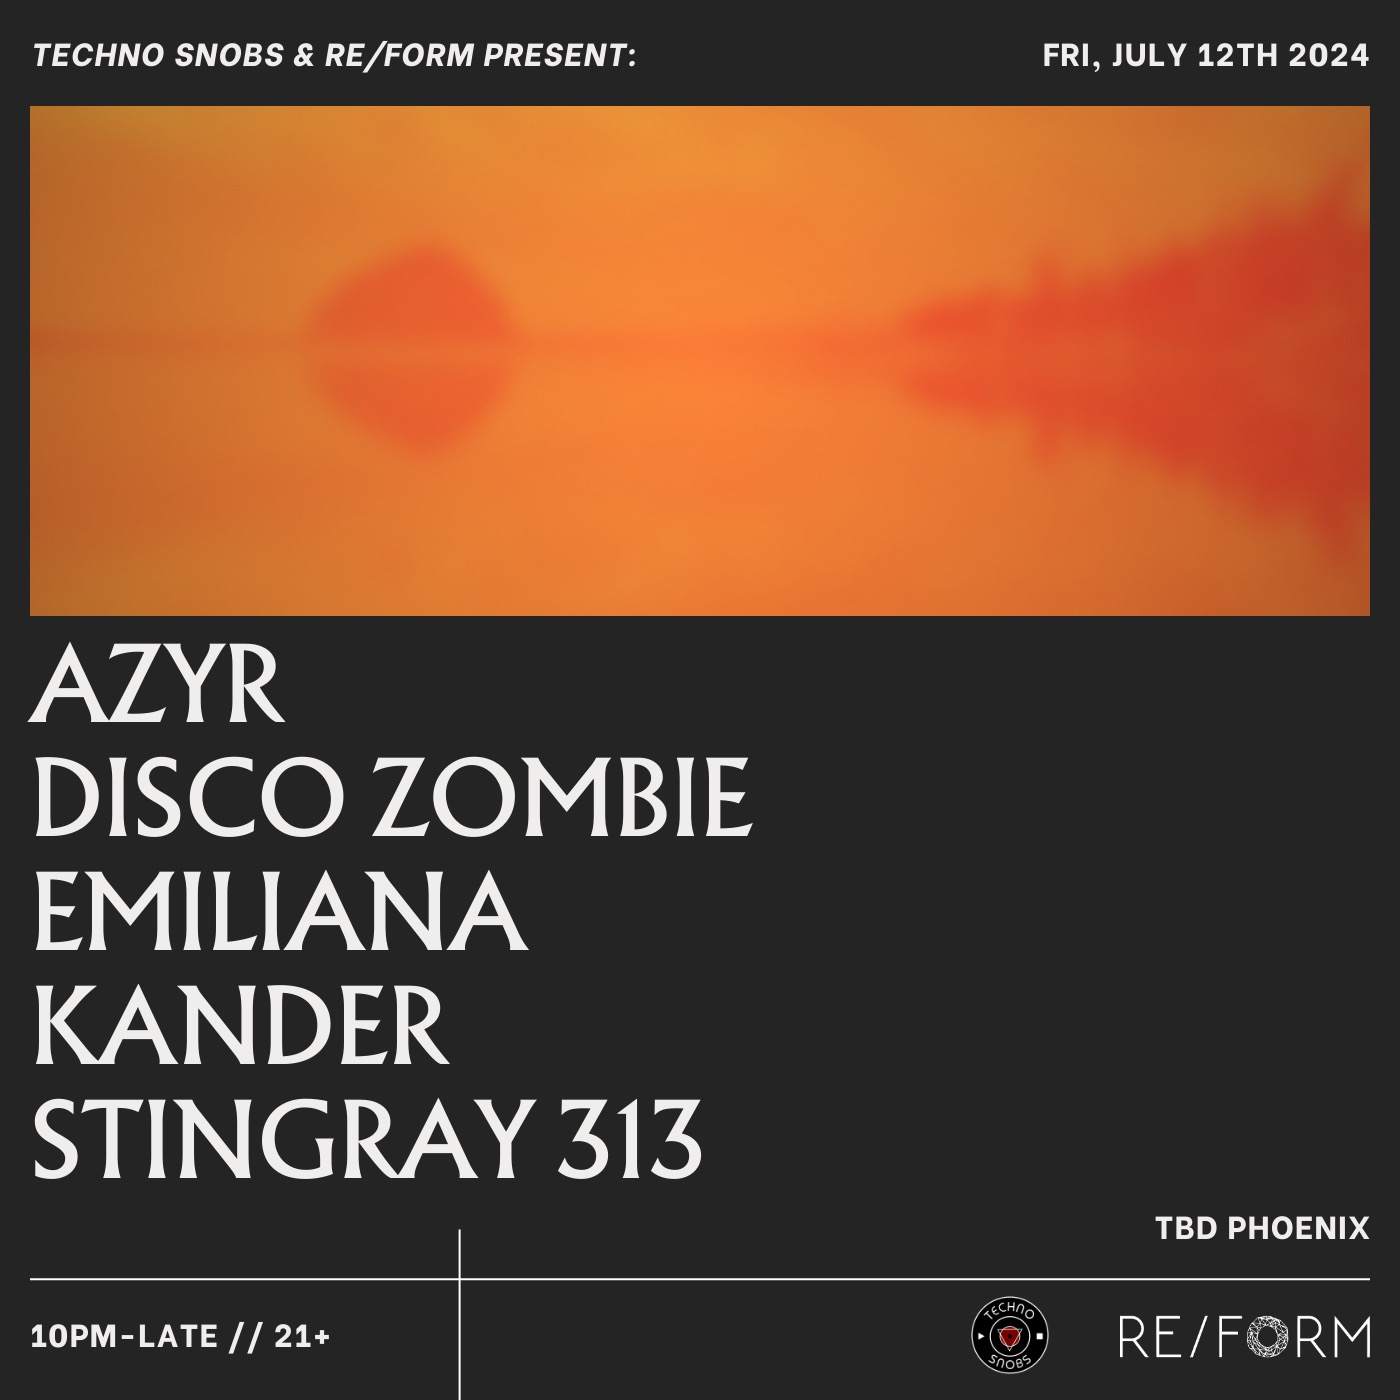 Techno Snobs x RE/FORM presents: Stingray 313, Kander, EMILIANA, Disco Zombie, Azyr - フライヤー表